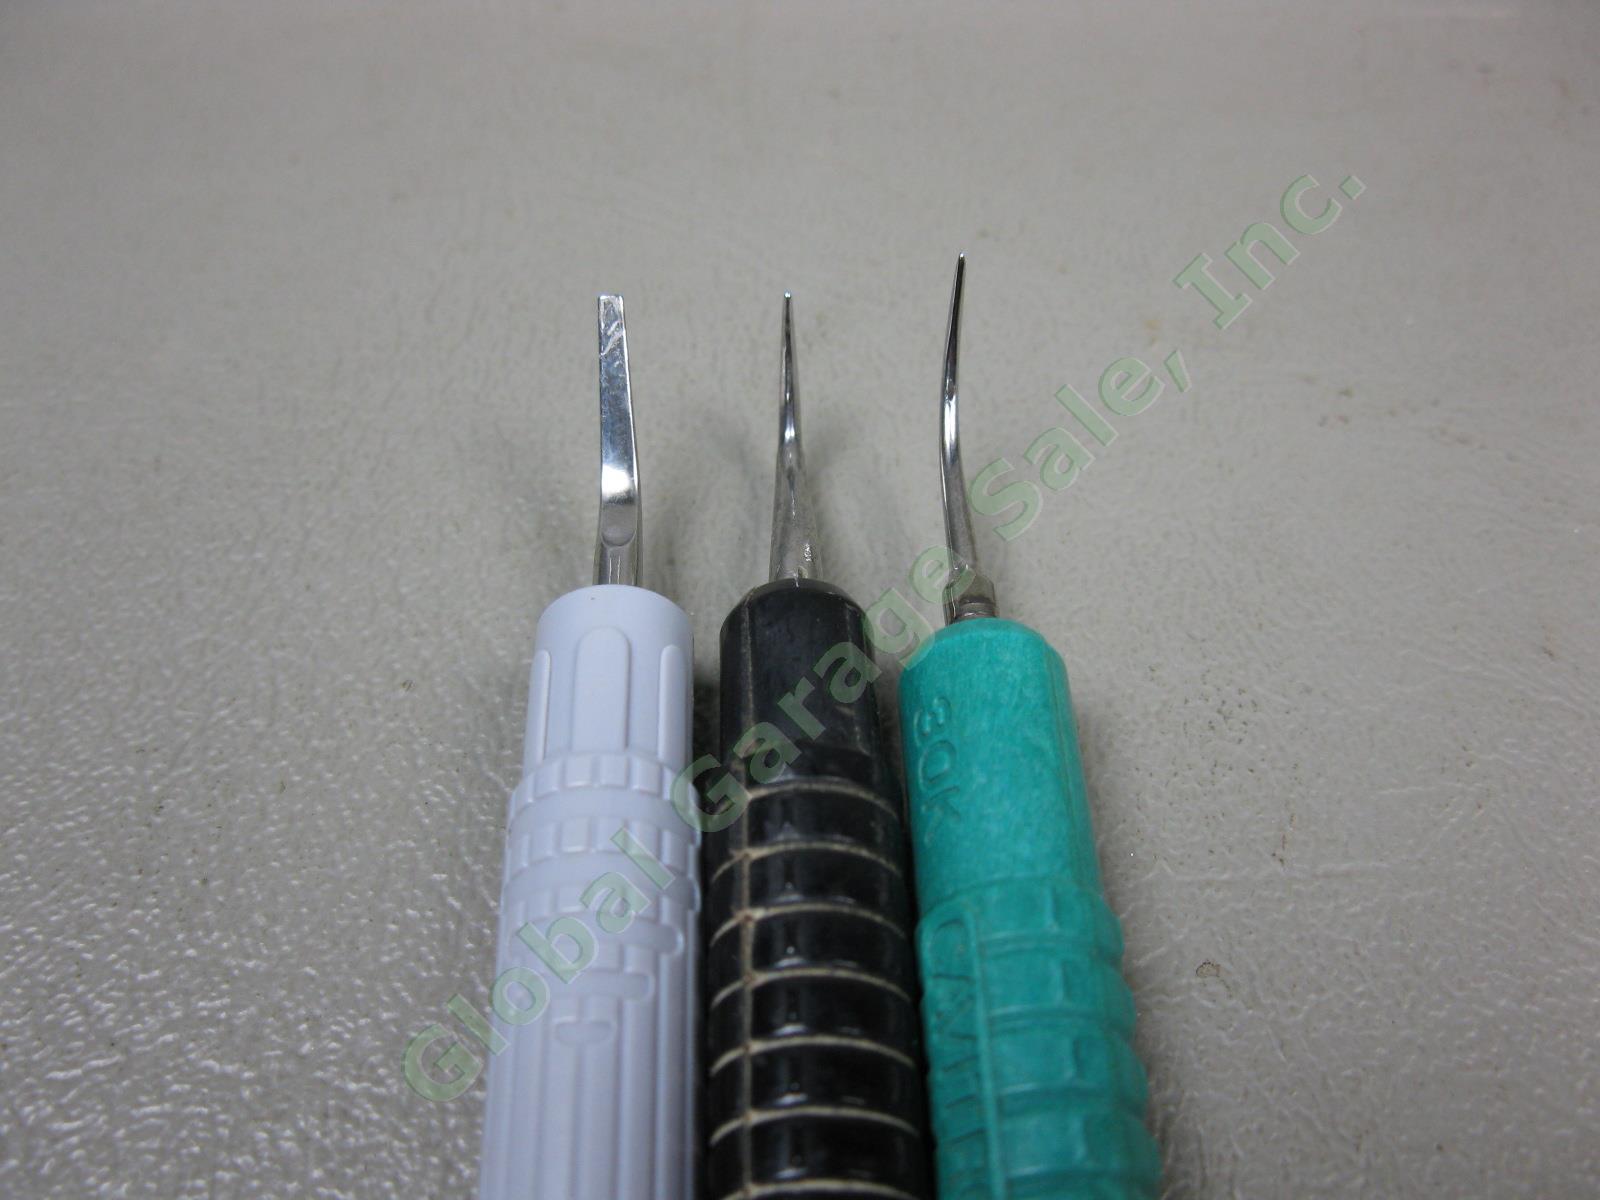 3 Ultrasonic 30k Cavitron Dental Insert Tips Lot Set Benco DF 3 Dentsply 9013 ++ 4